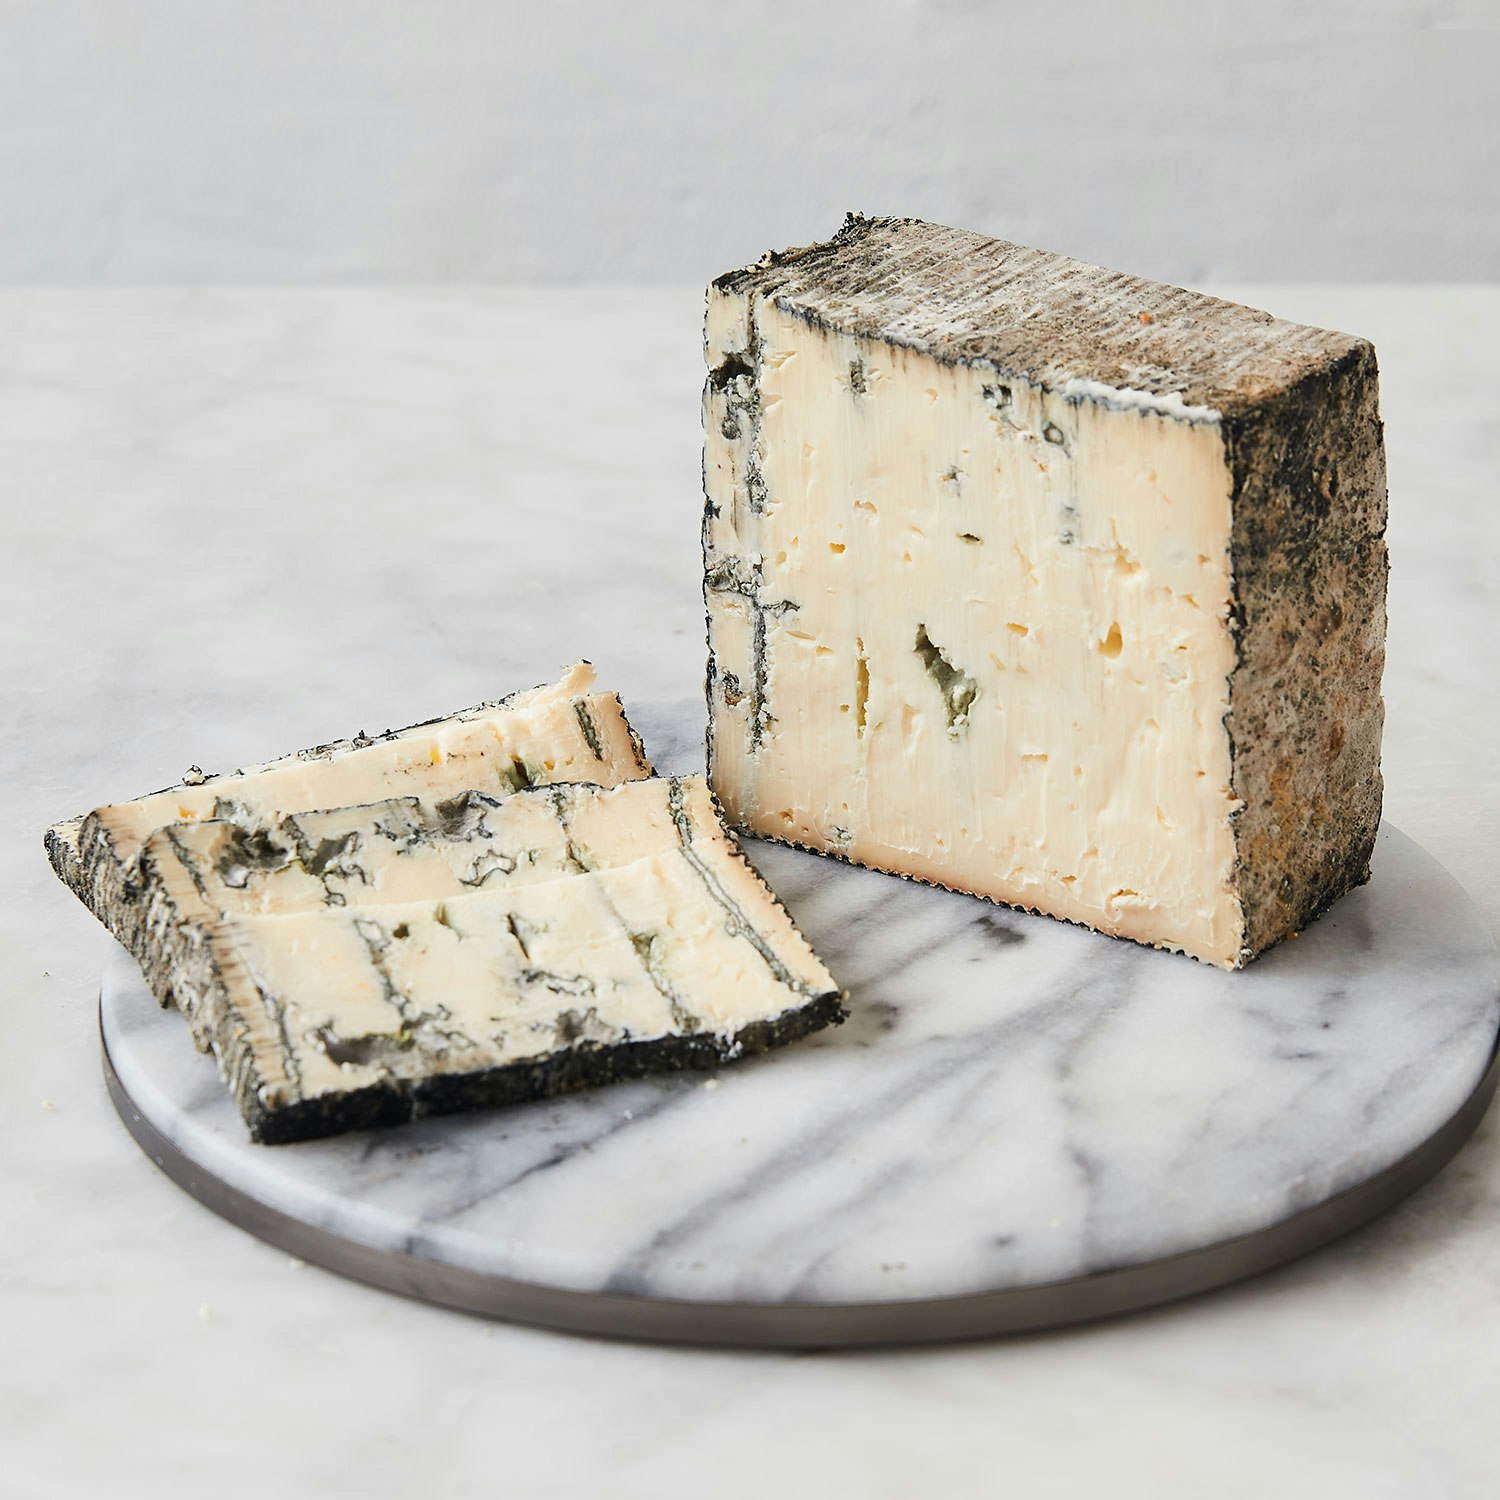 Bleu de Combremont cheese